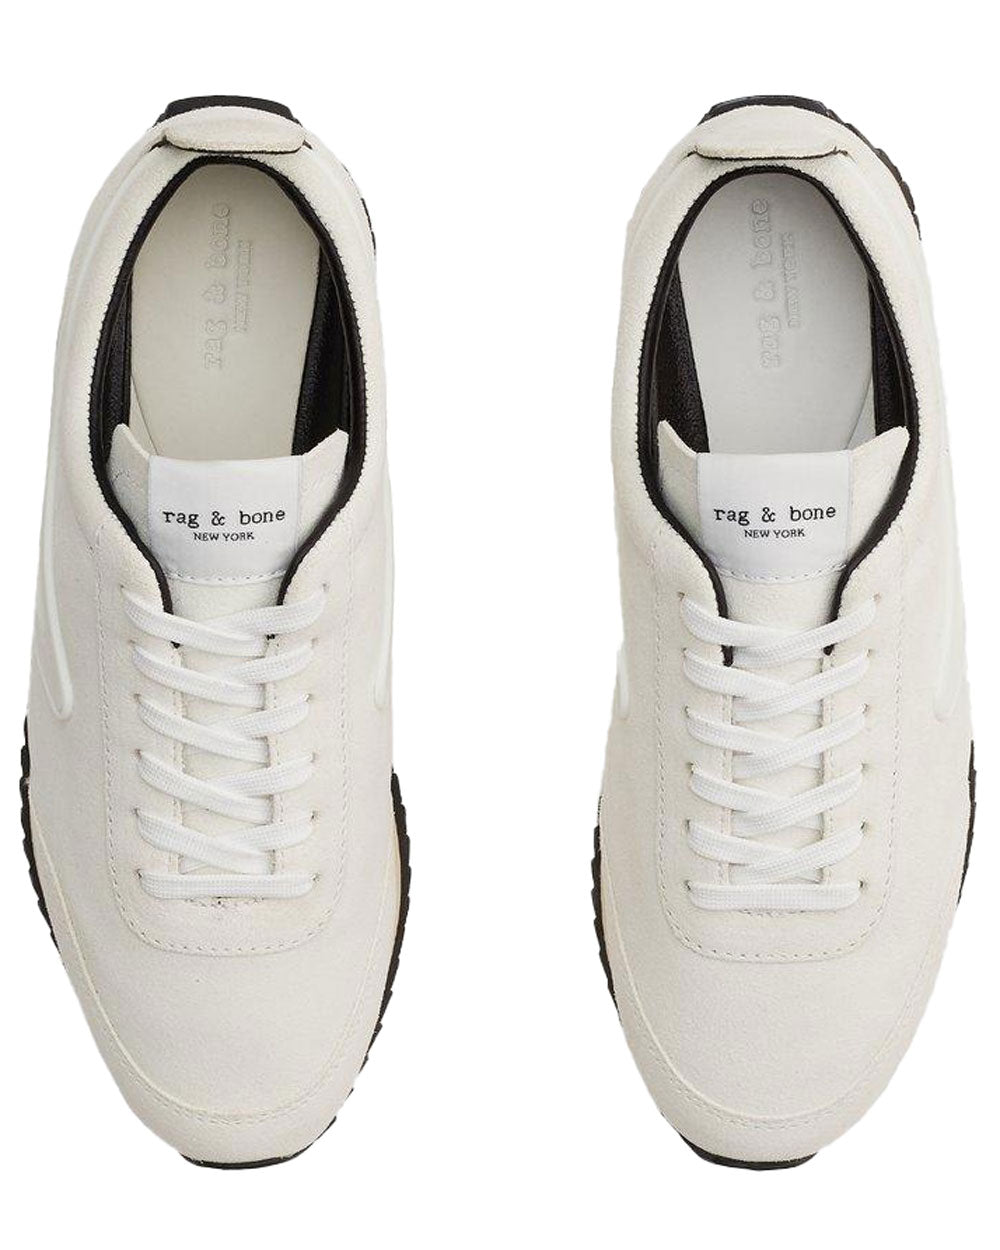 Retro Runner Sneaker in Antique White Suede